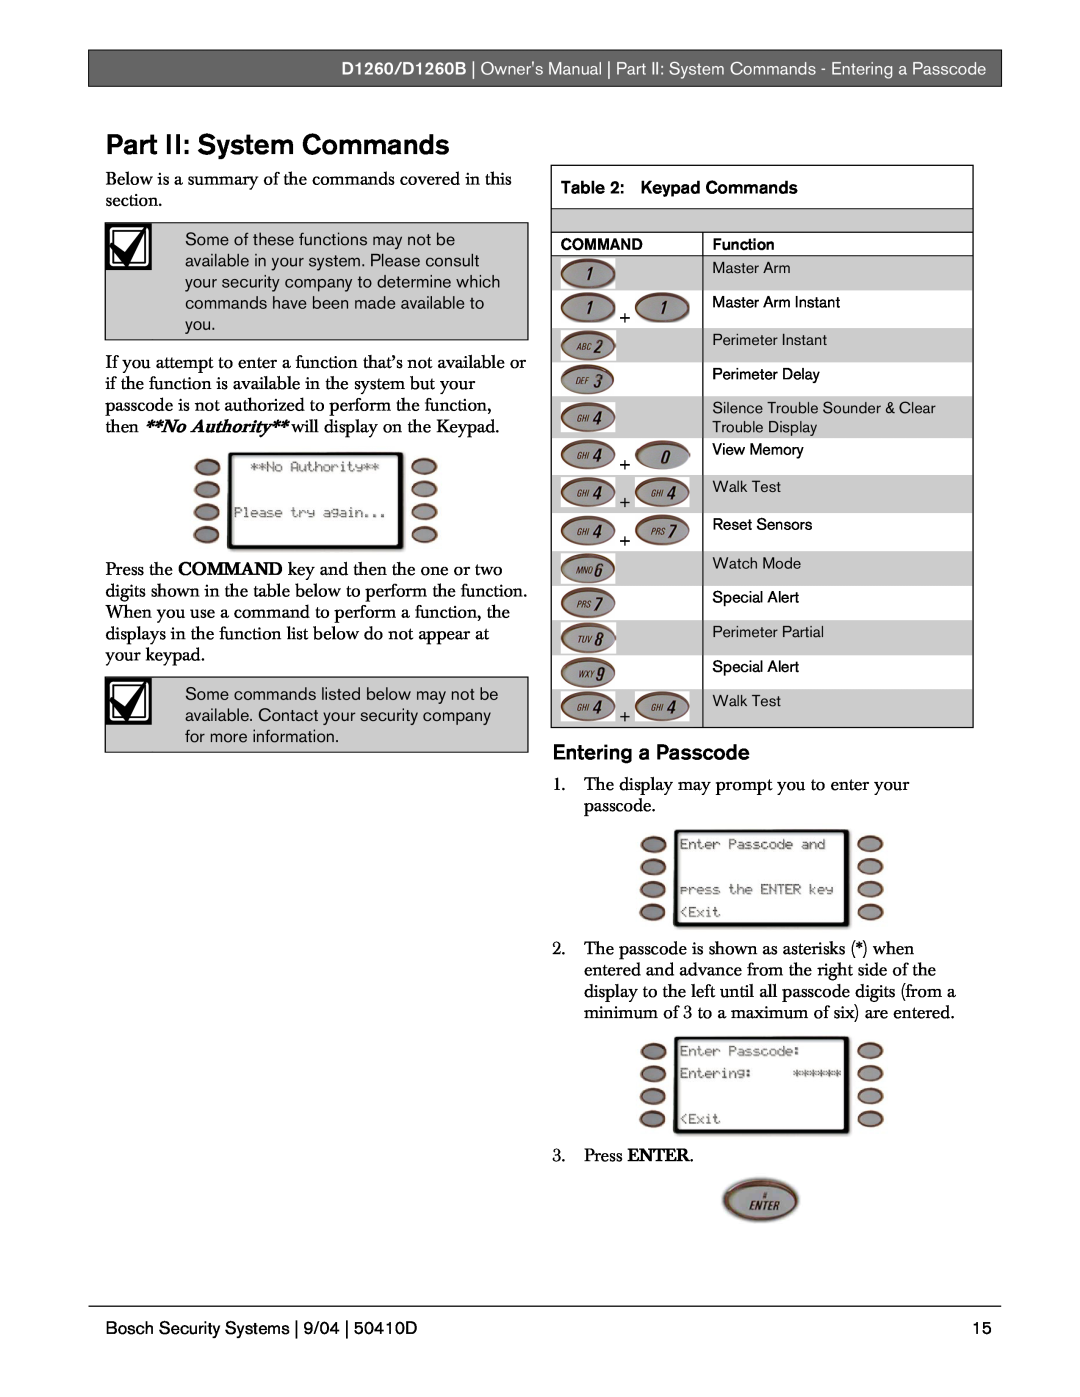 Bosch Appliances D1260B owner manual Part II: System Commands, Entering a Passcode 